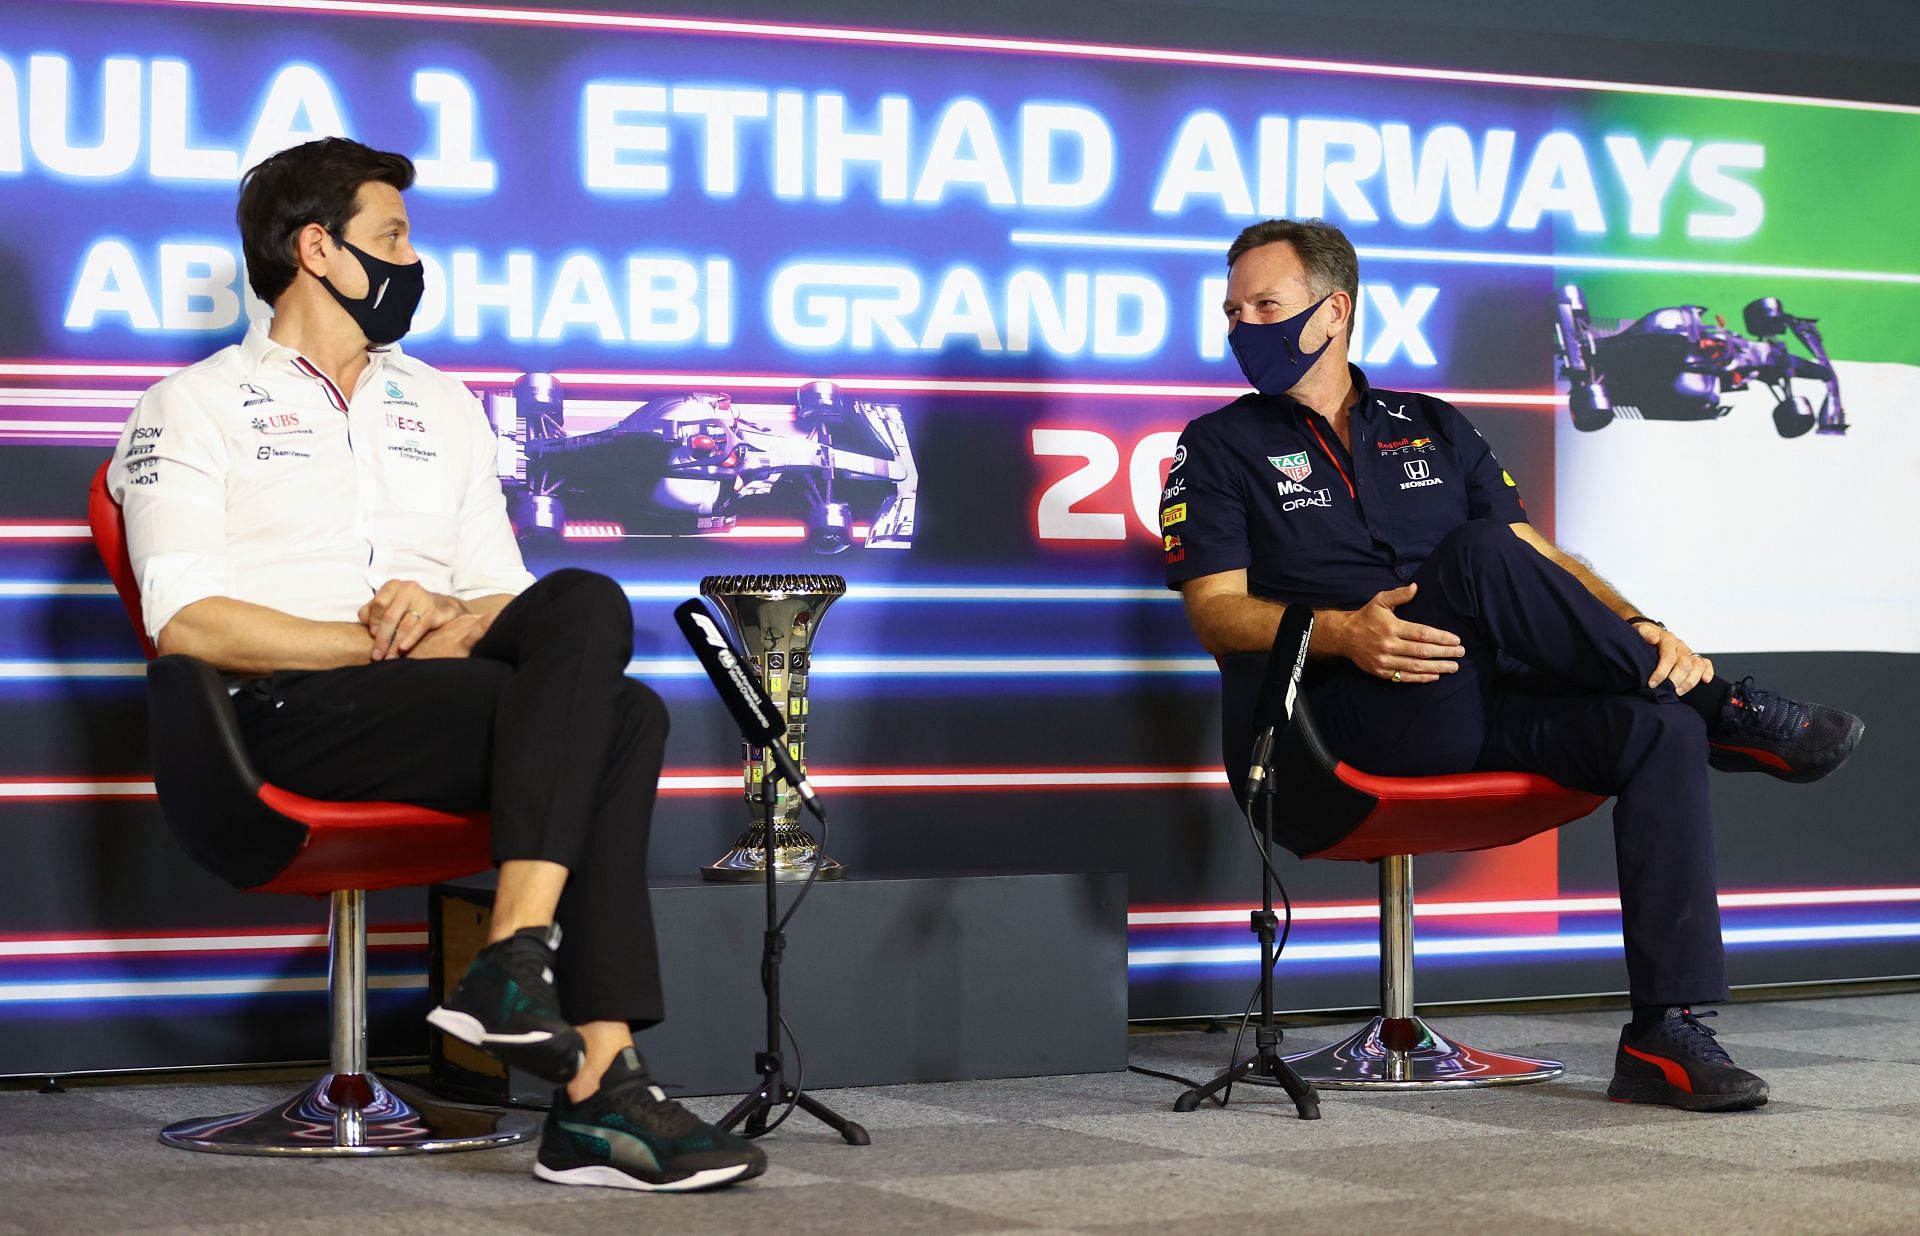 F1 Grand Prix of Abu Dhabi - Toto Wolff and Christian Horner before the Abu Dhabi Grand Prix.